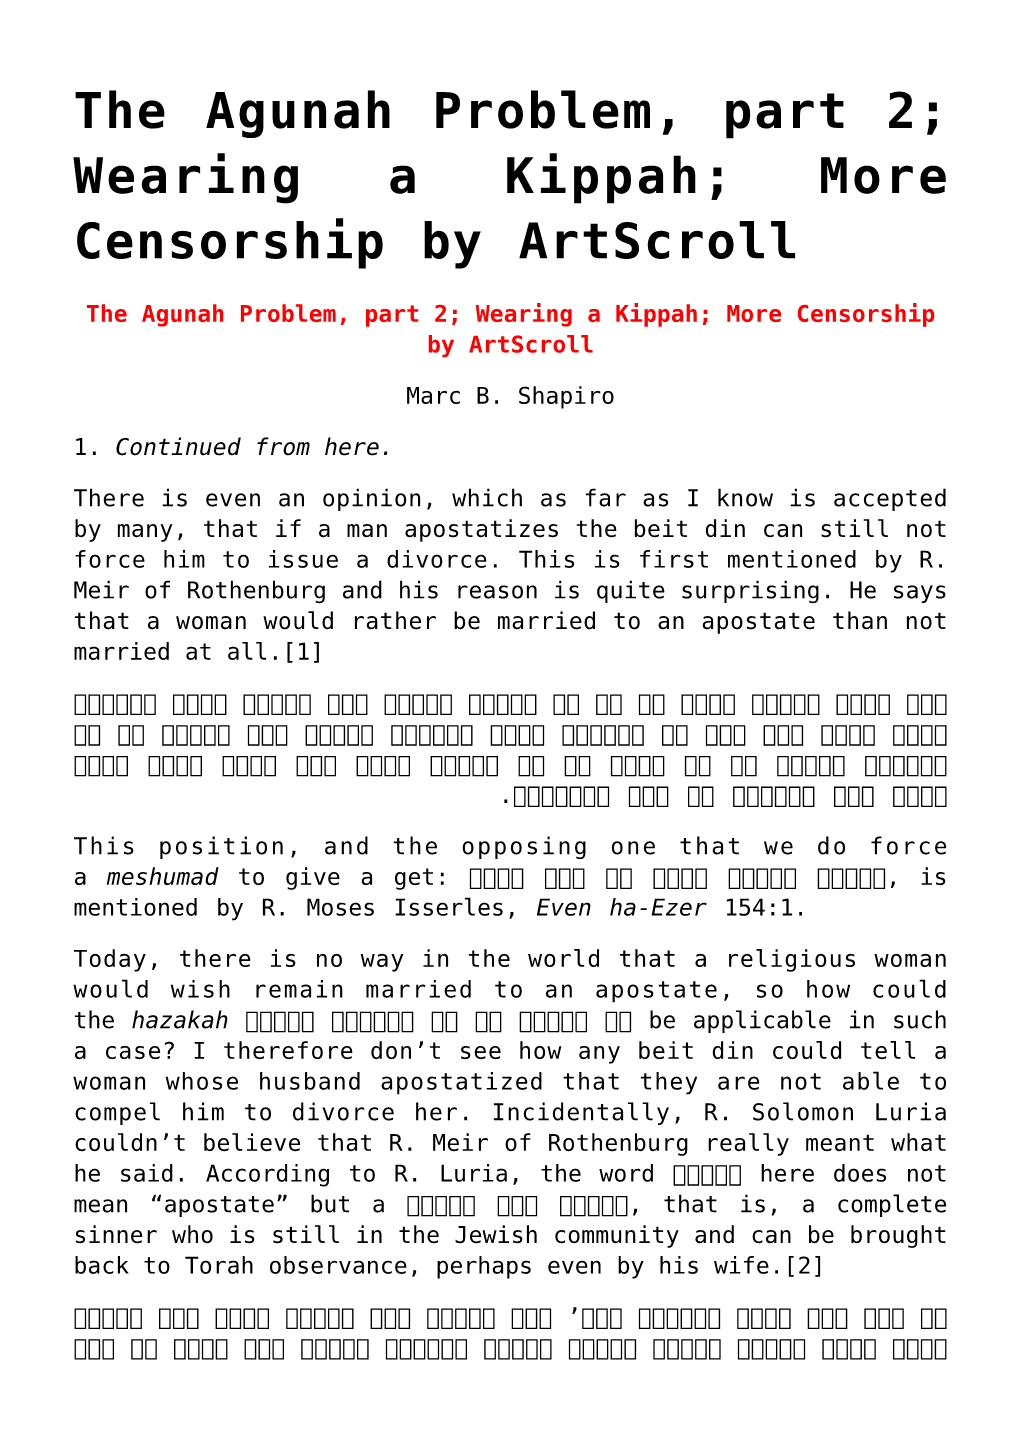 Censorship by Artscroll,The Agunah Problem, Part 1